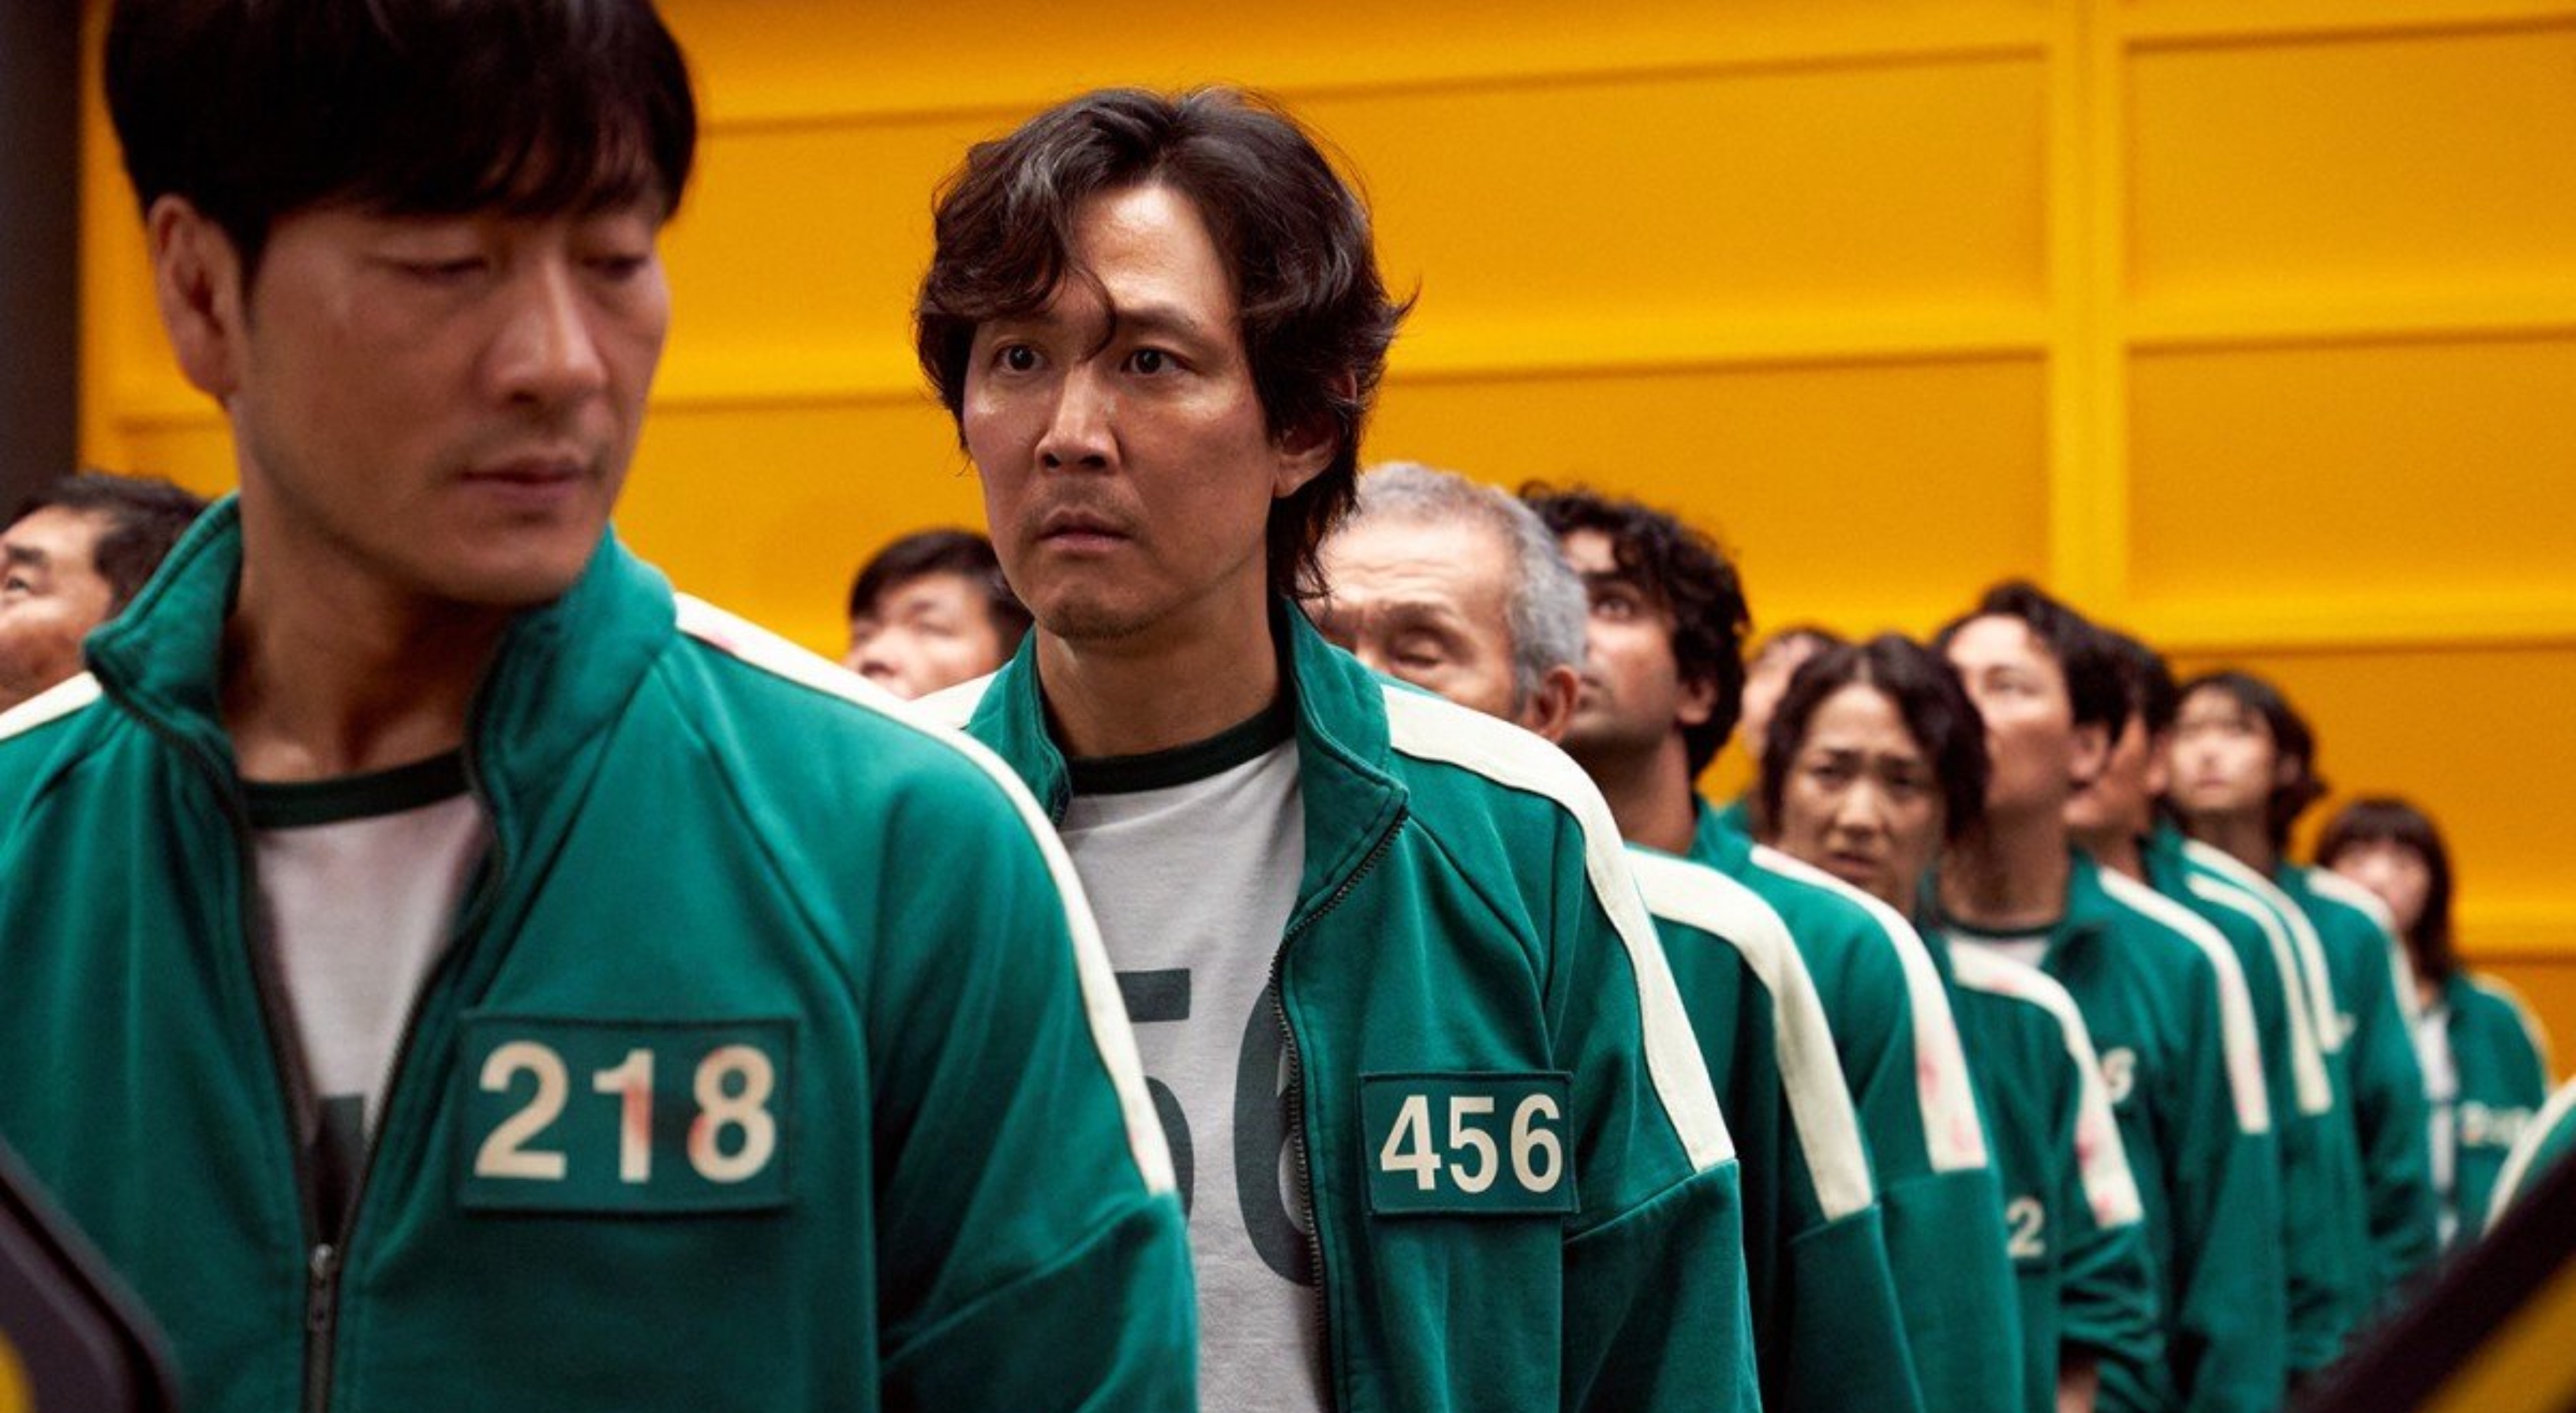 Lee Jung-Jae in Netflix's 'Squid Game' wearing green tracksuit